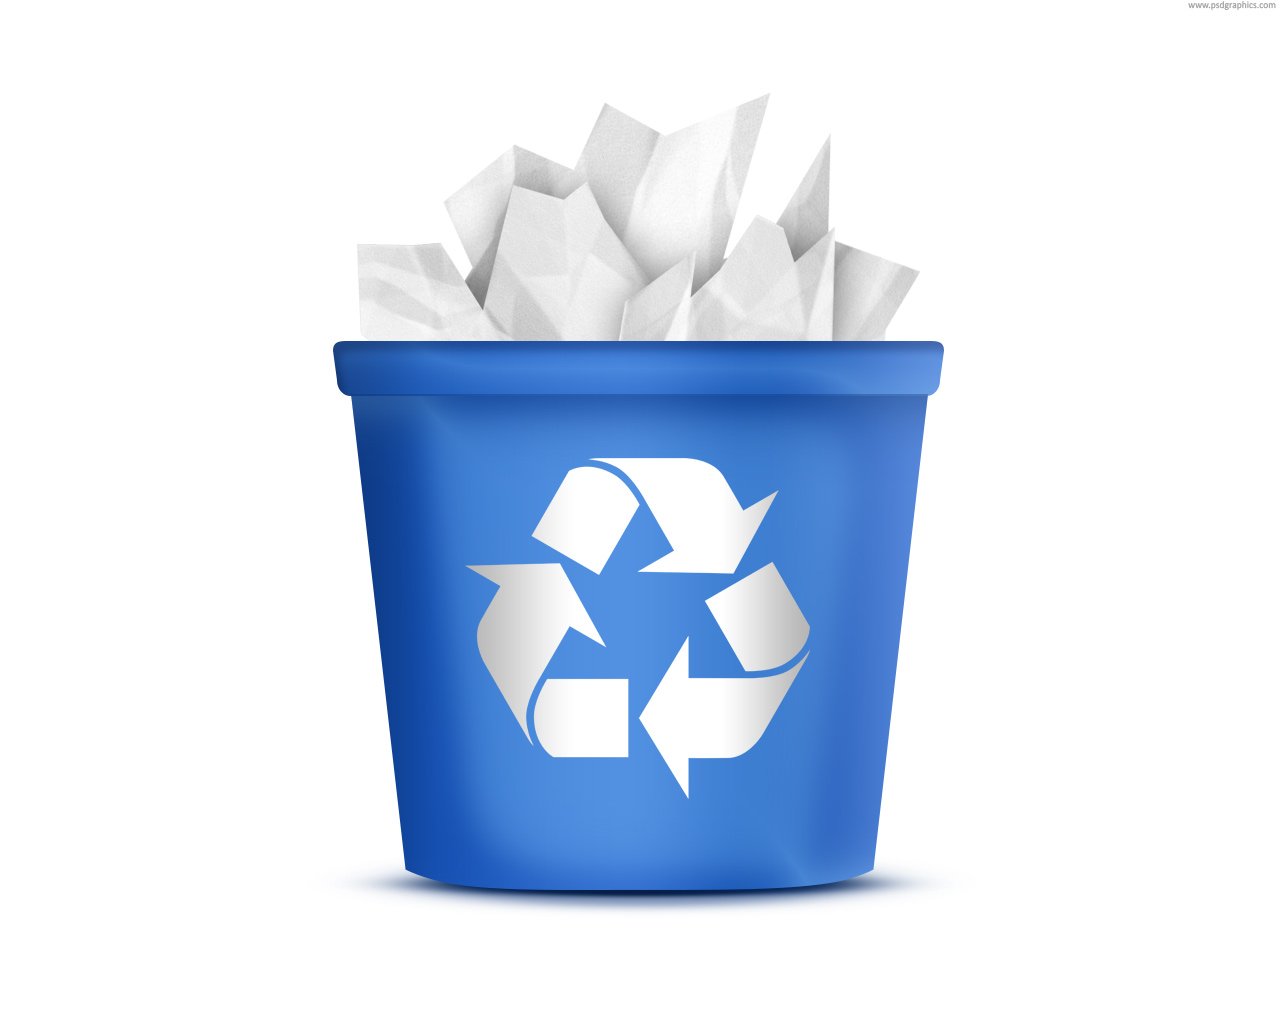 recycling-bin-icon.jpg